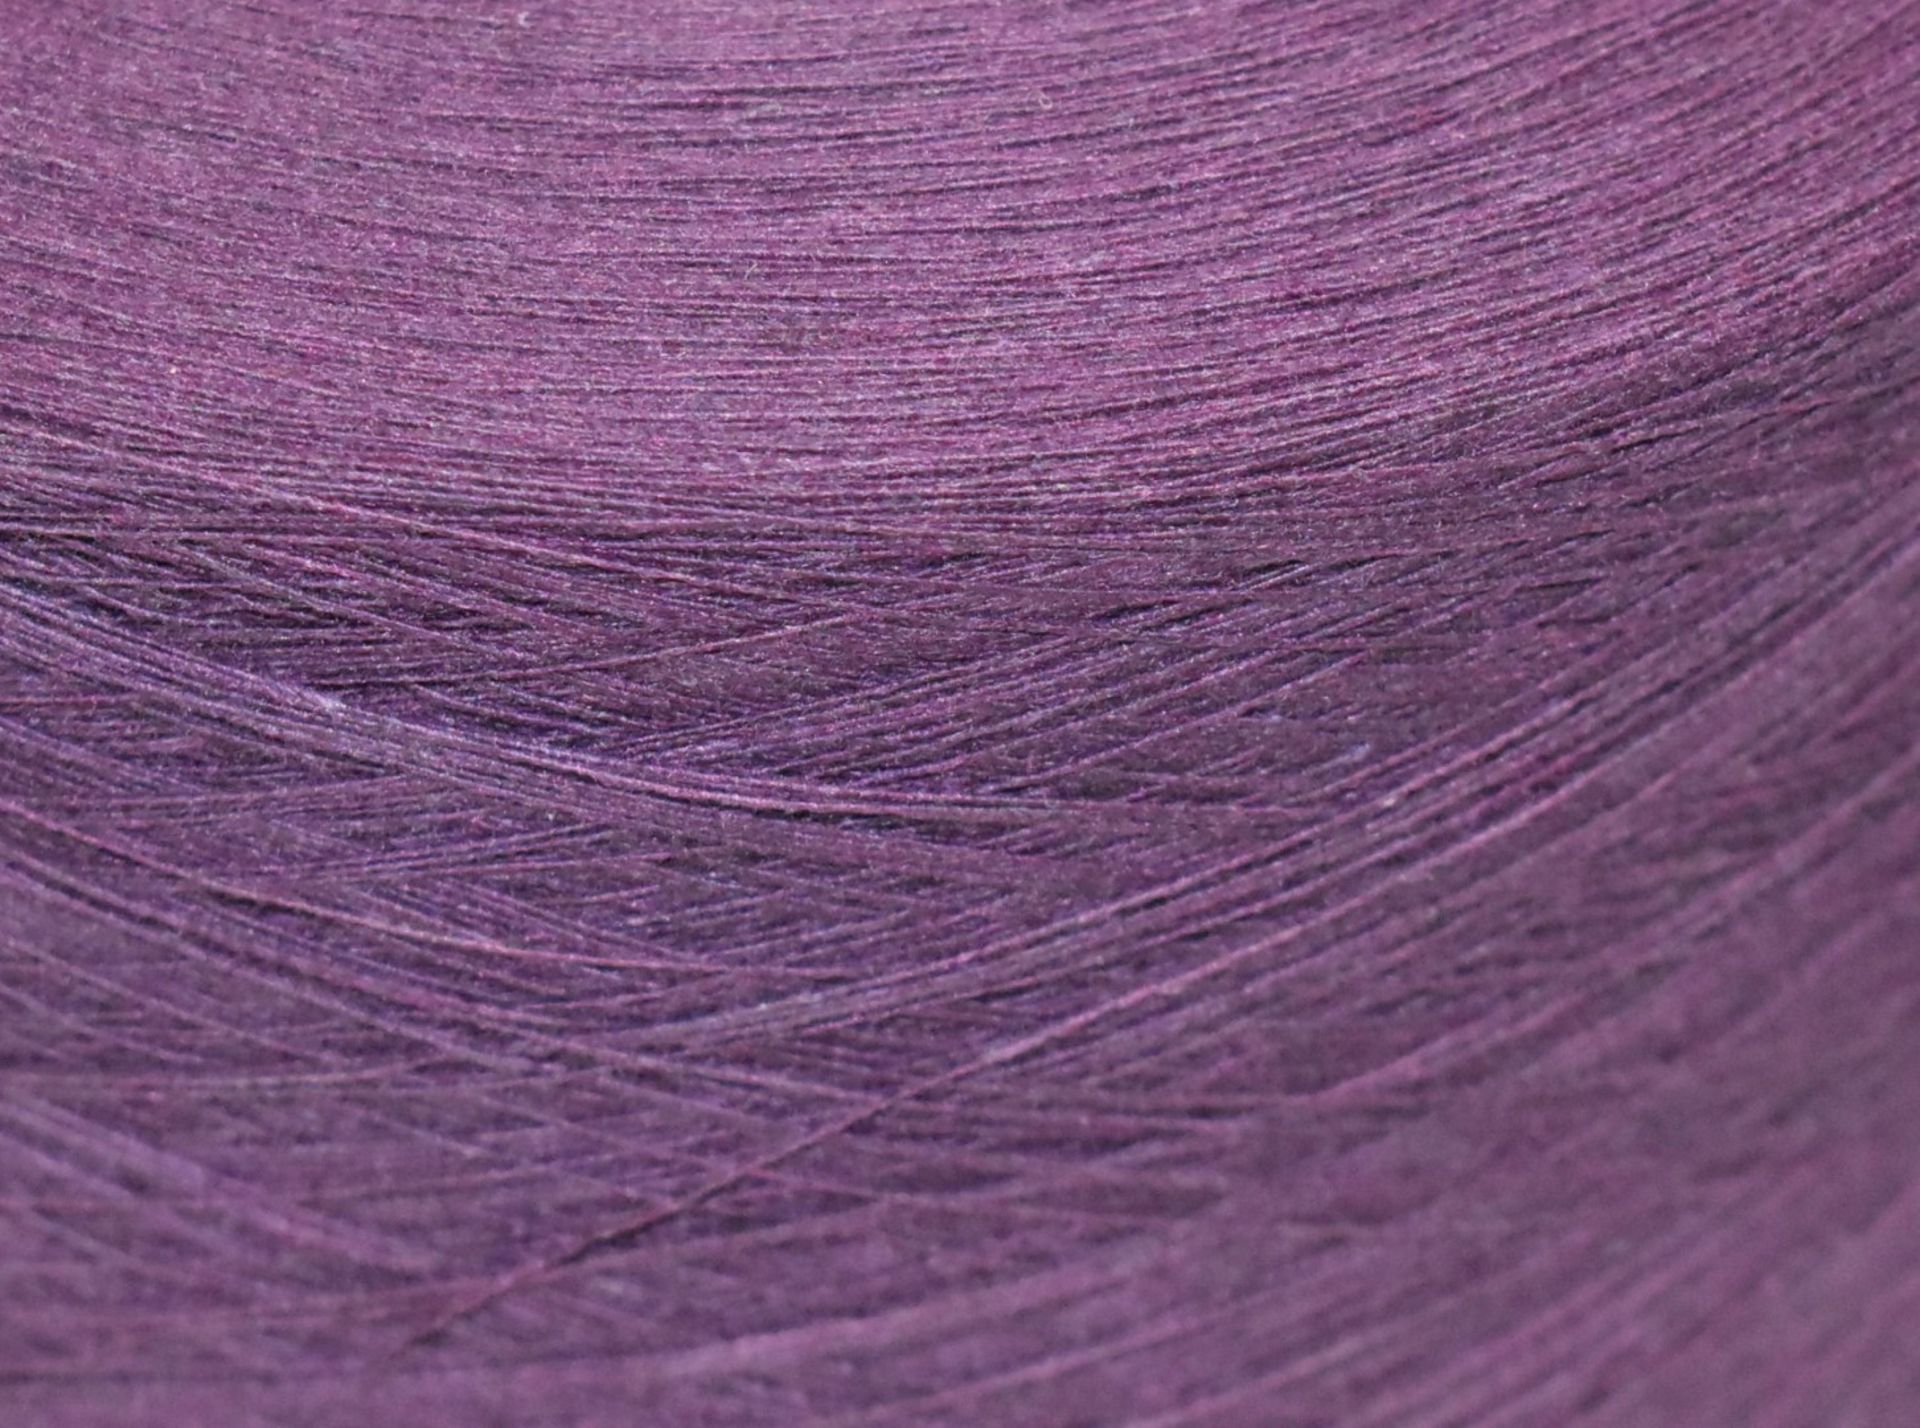 1 x Cone of 1/13 MicroCotton Knitting Yarn - Purple - Approx Weight: 2,300g - New Stock ABL Yarn - Bild 4 aus 13